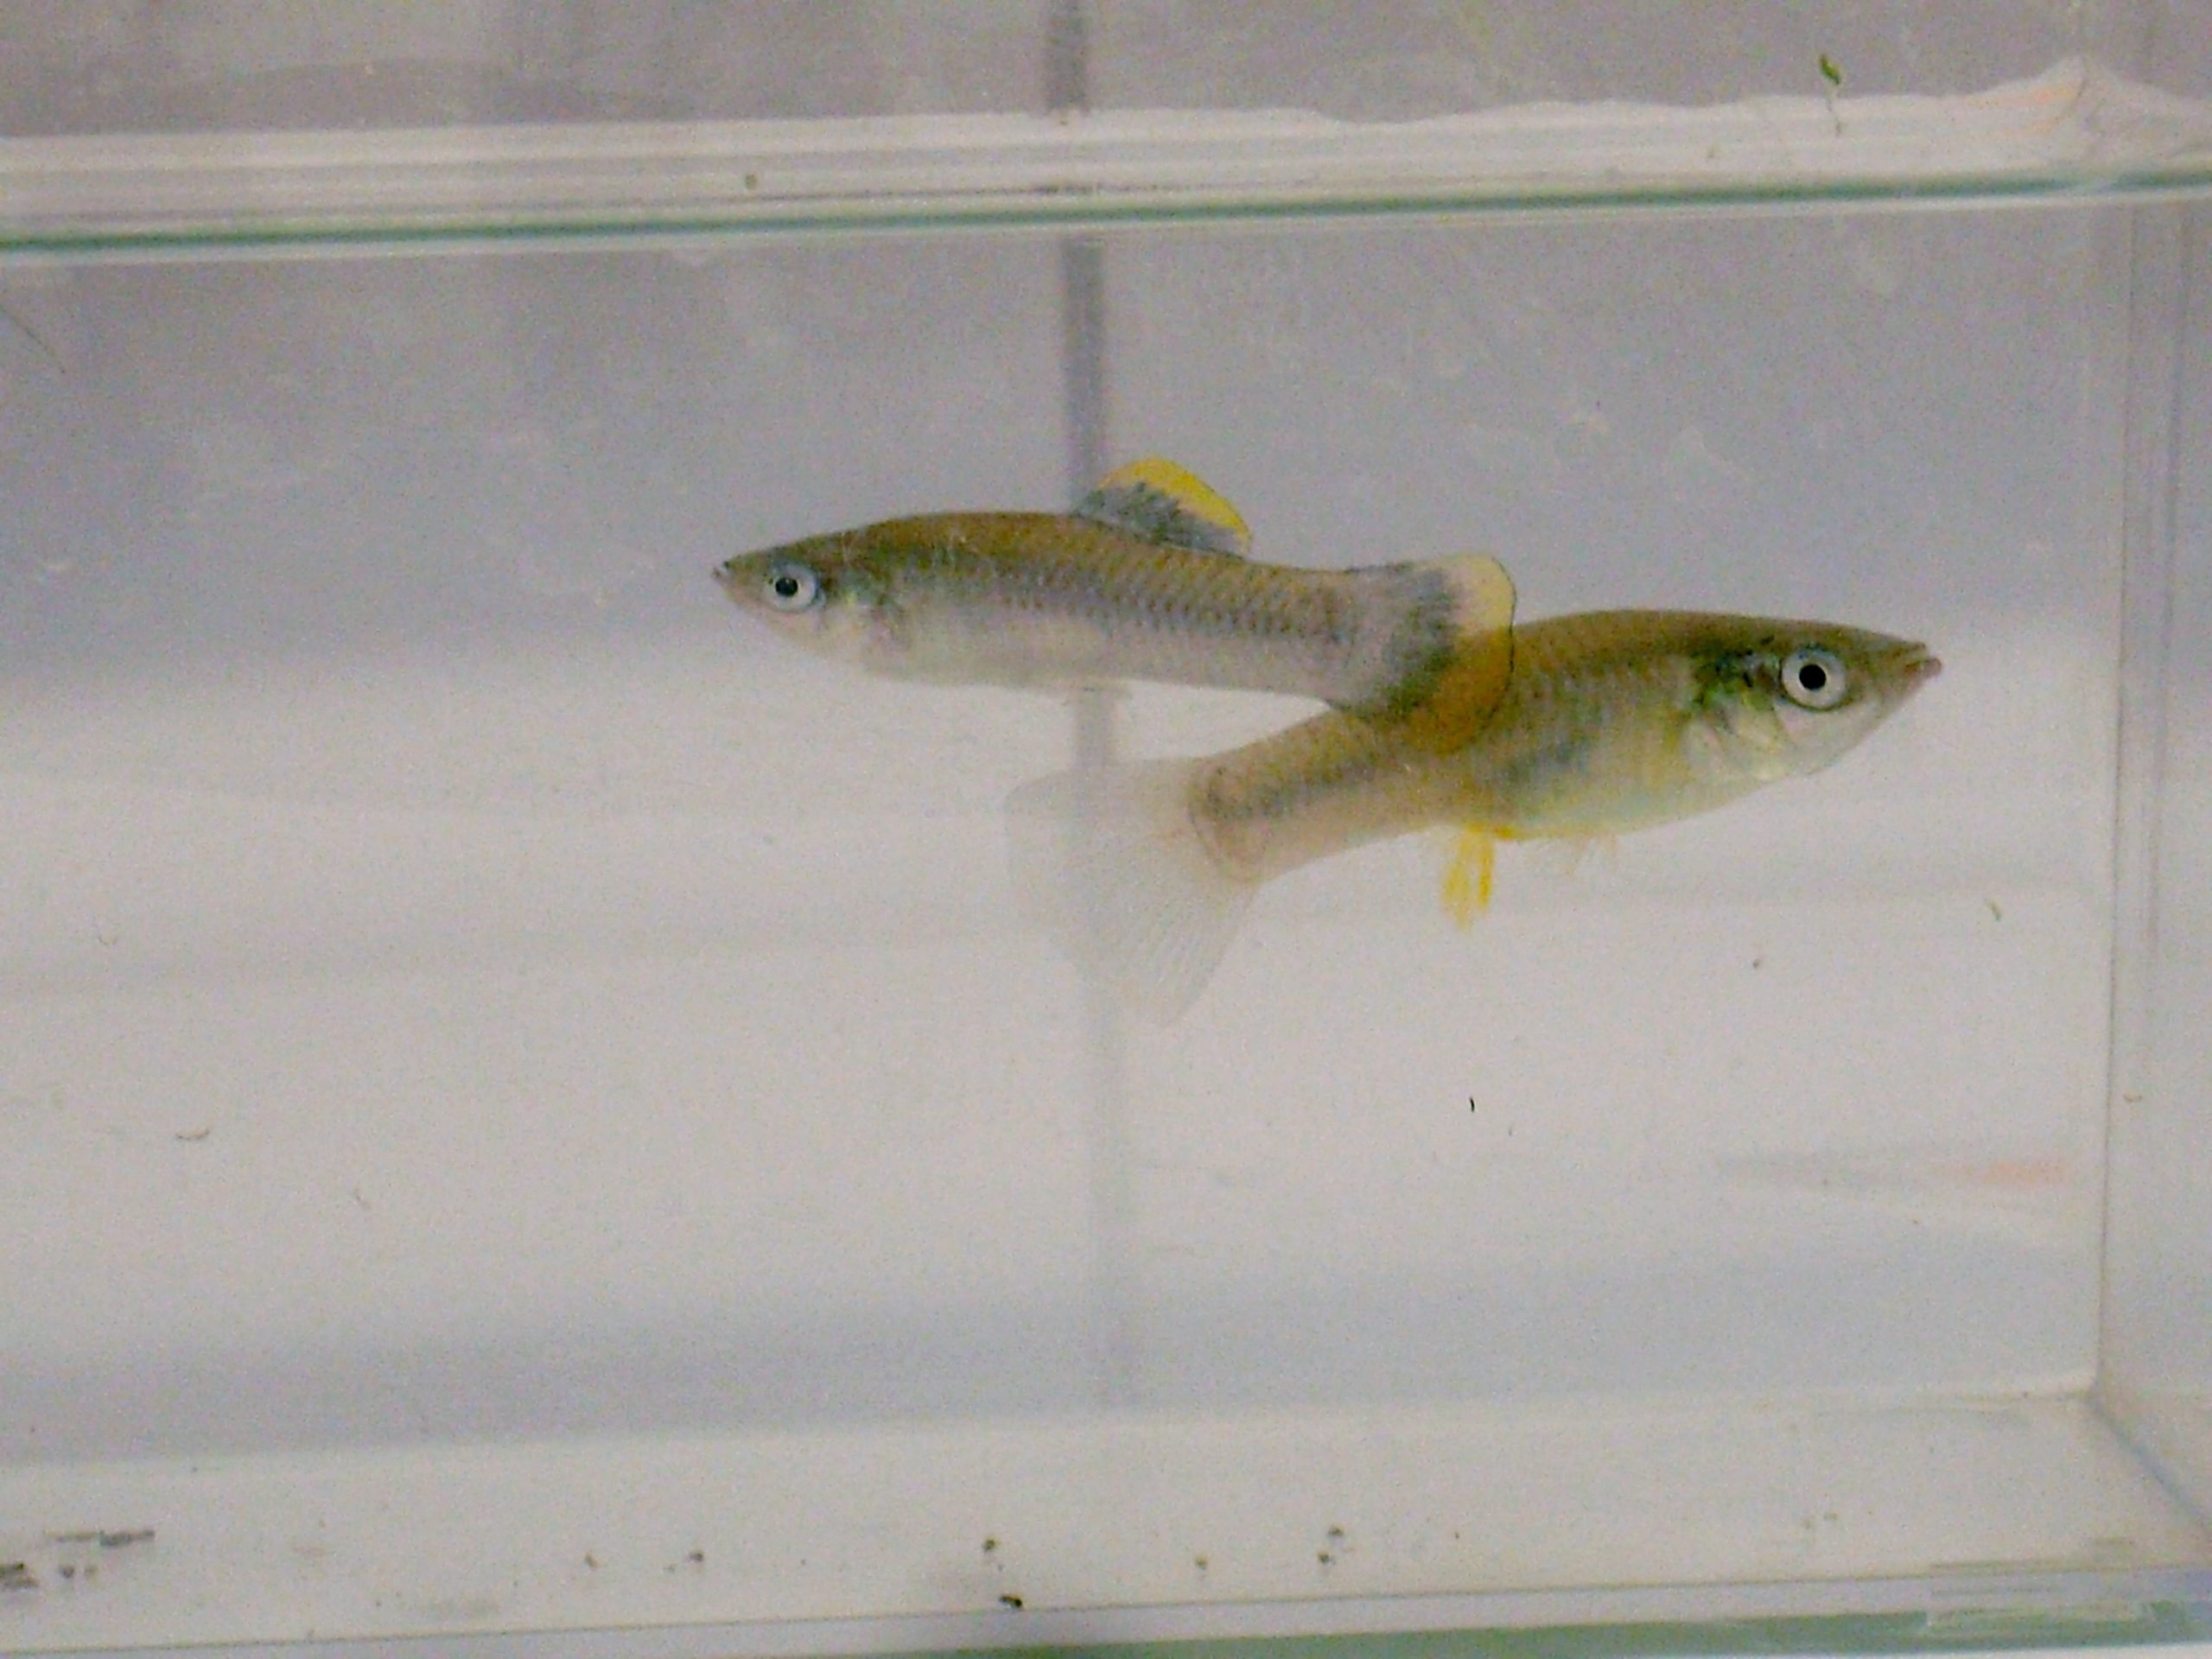 Like Parent, Like Offspring: Fish Inherit Changes in DNA Methylation